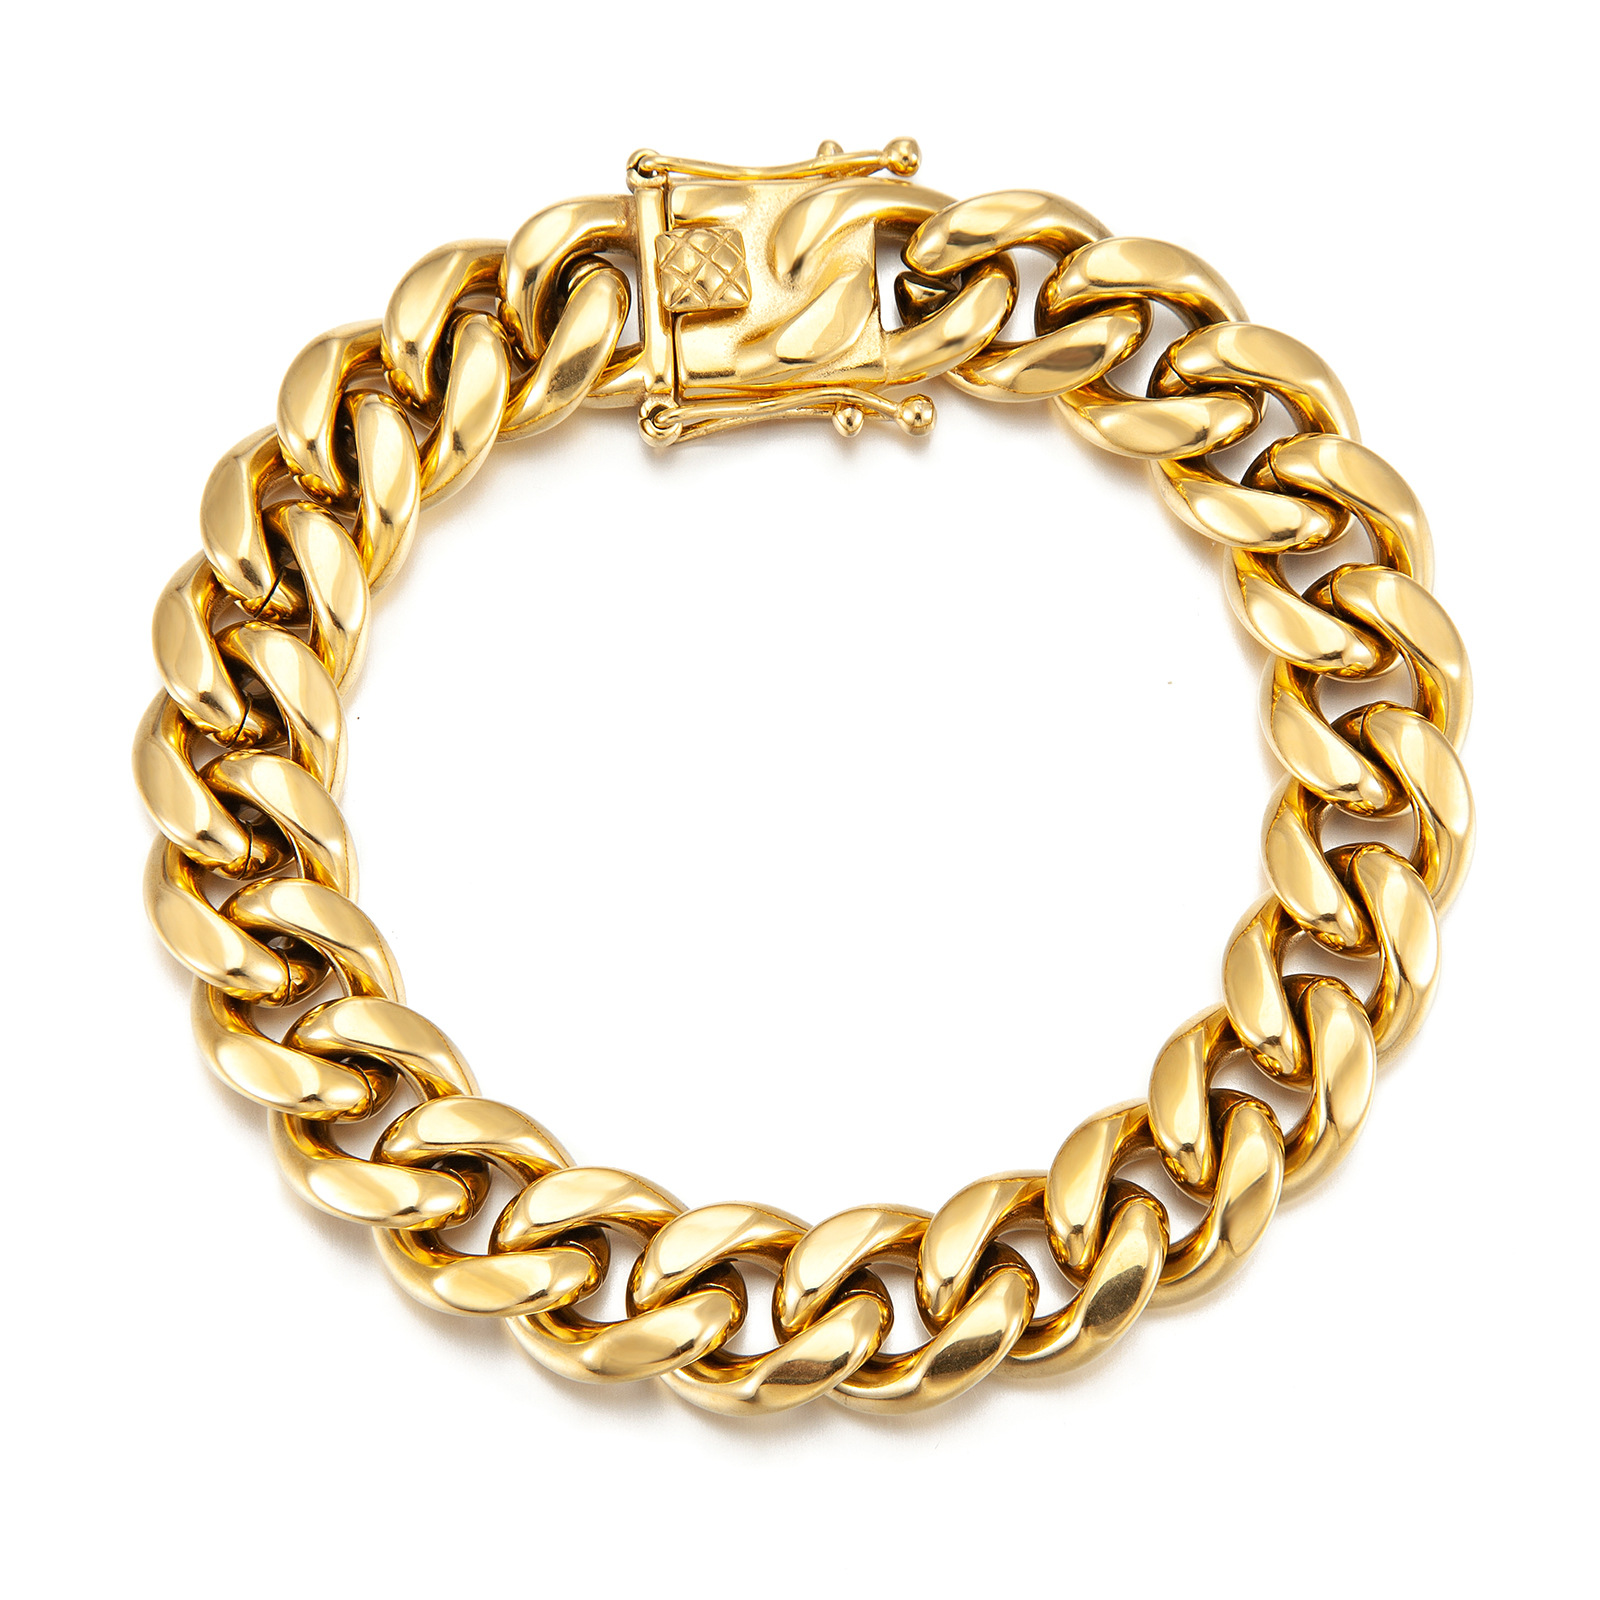 9:Bracelet Gold 14mm*22cm